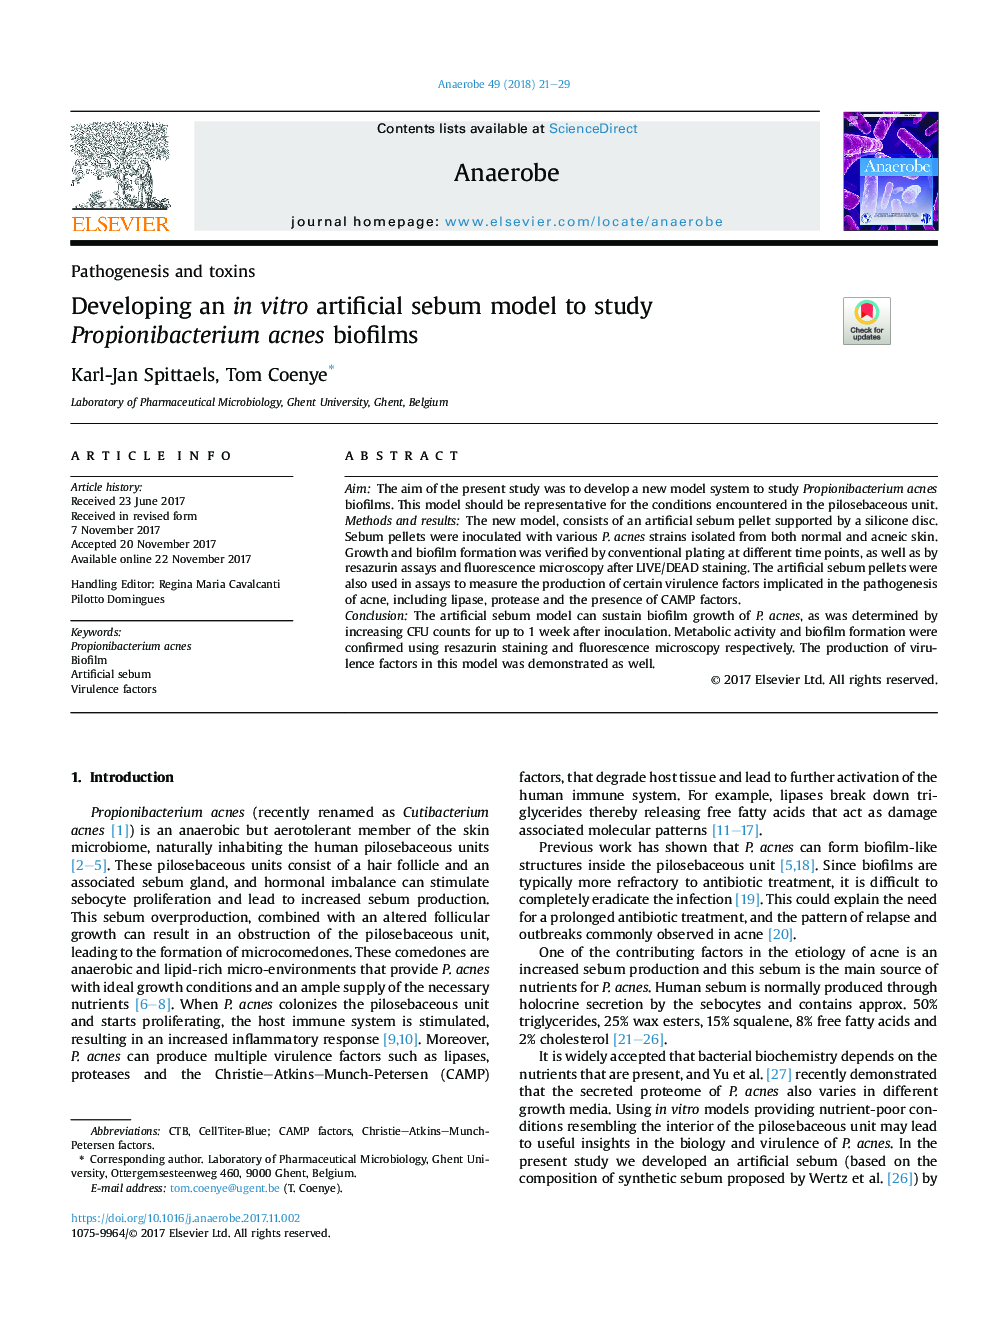 Developing an inÂ vitro artificial sebum model to study Propionibacterium acnes biofilms